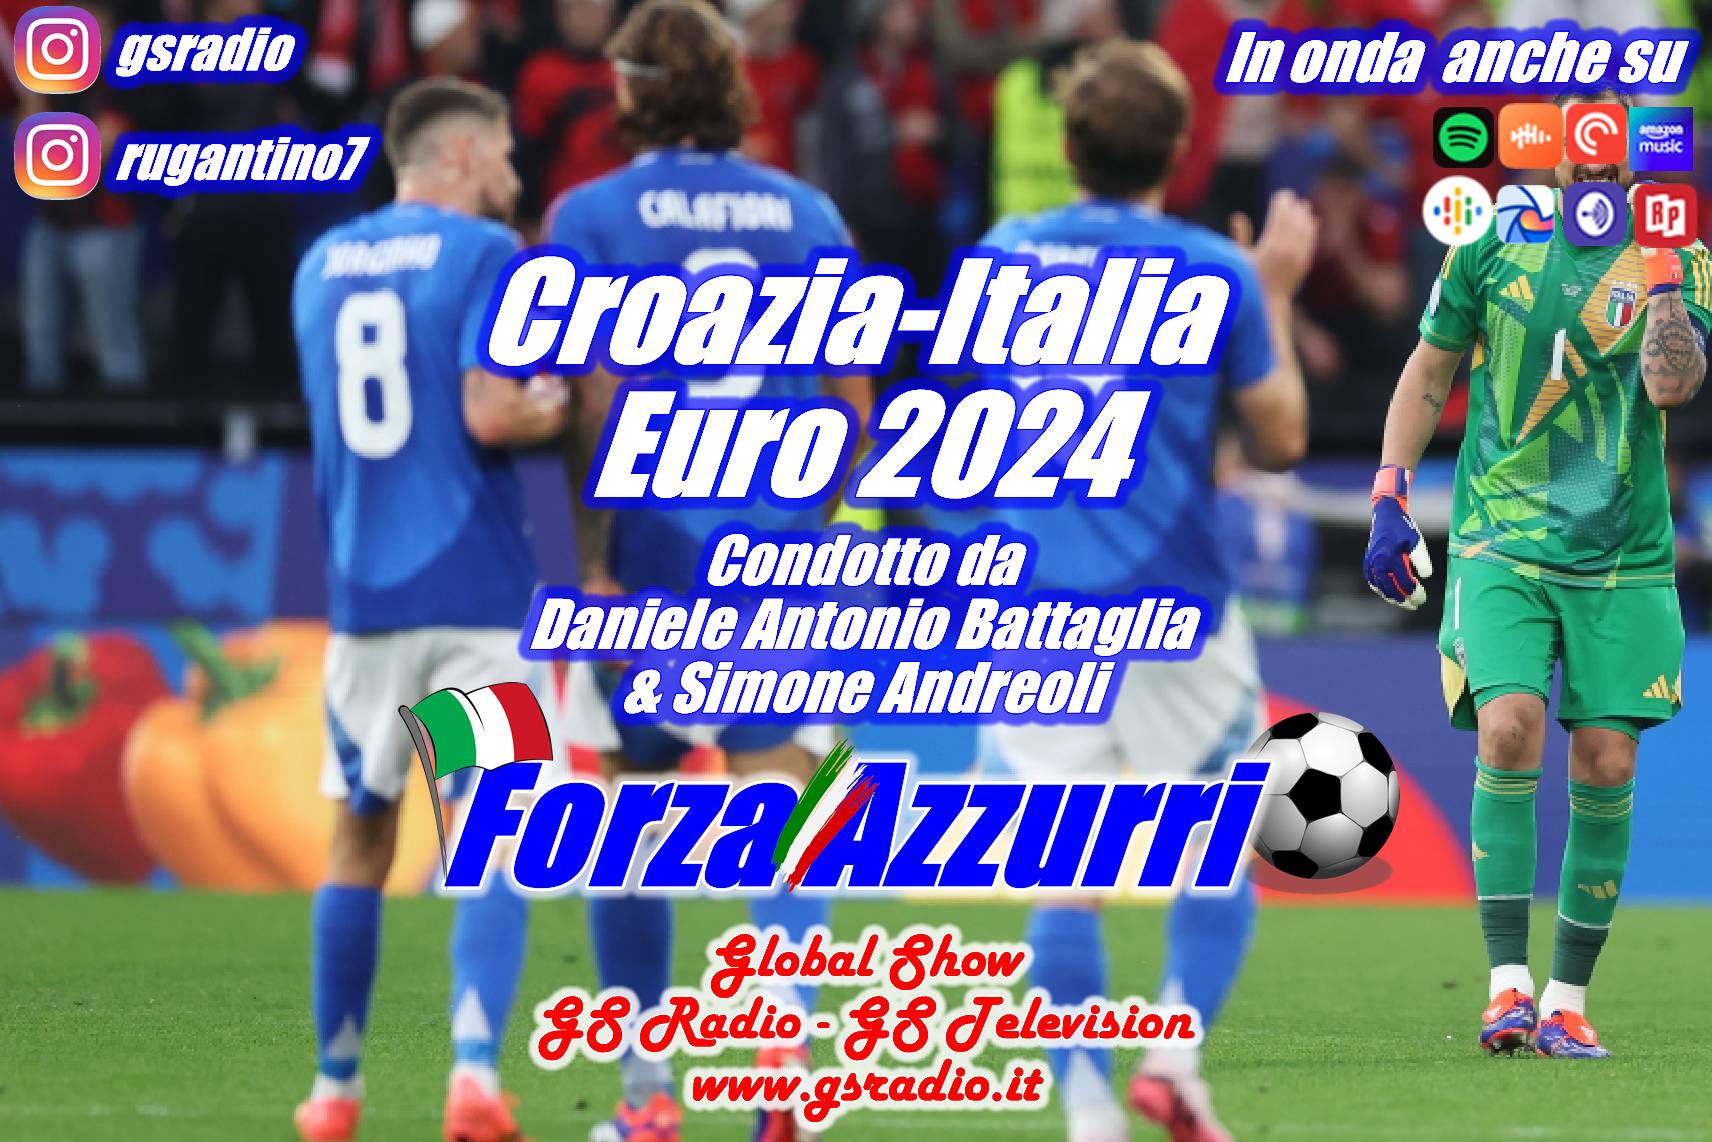 6 - Croazia-Italia Euro 2024